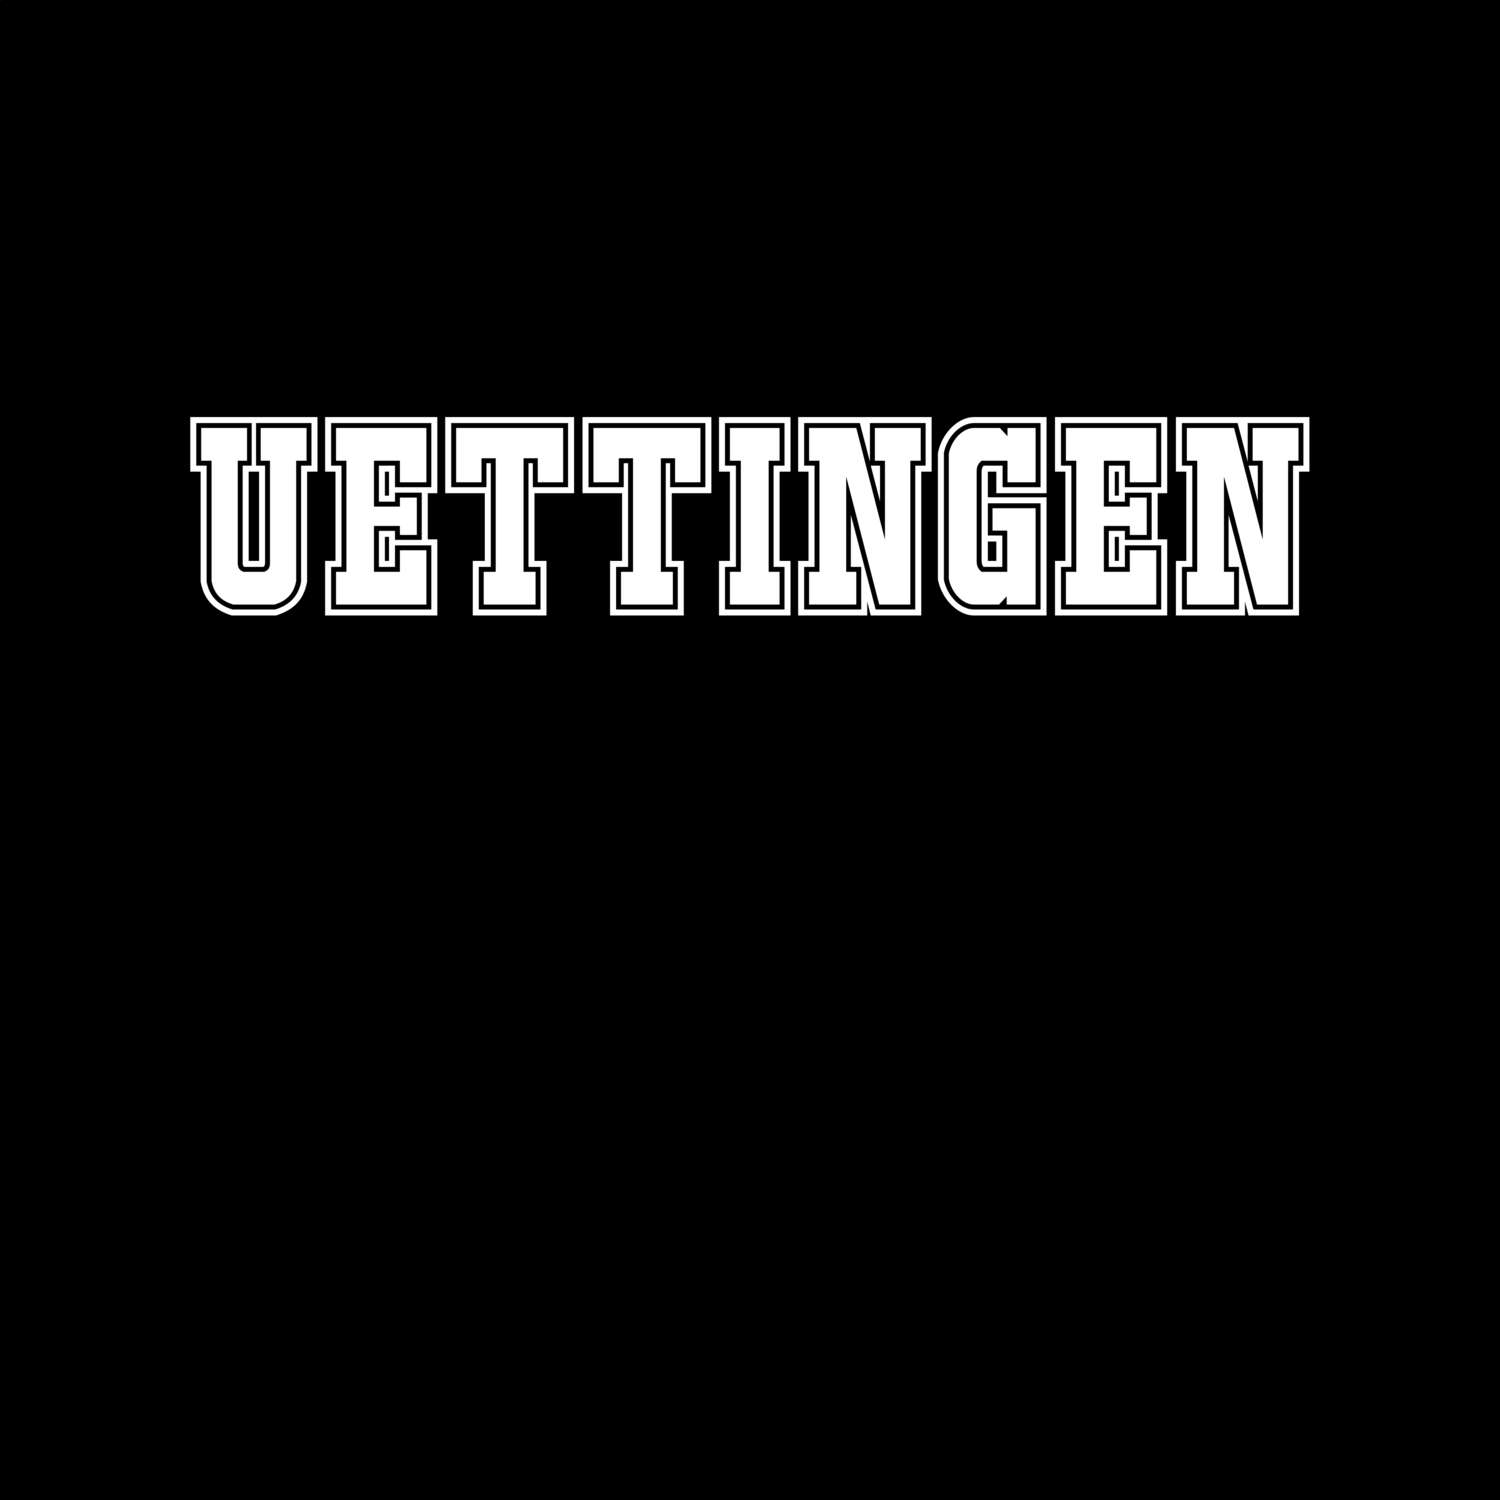 Uettingen T-Shirt »Classic«